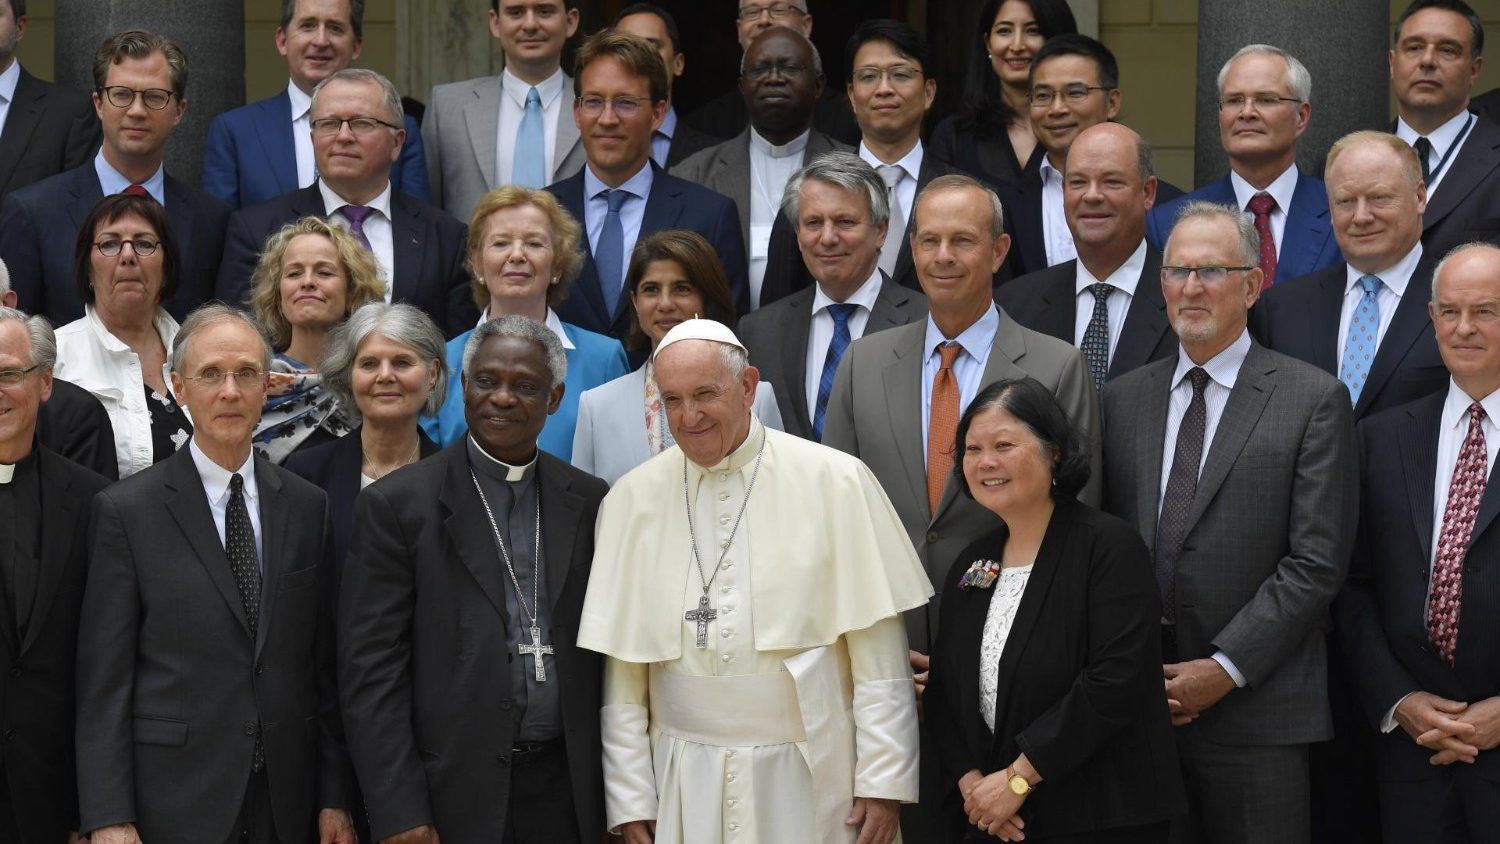 Papst an Energieriesen: „Klimatischer Notstand erfordert radikalen Energiewandel“ – Vatican News